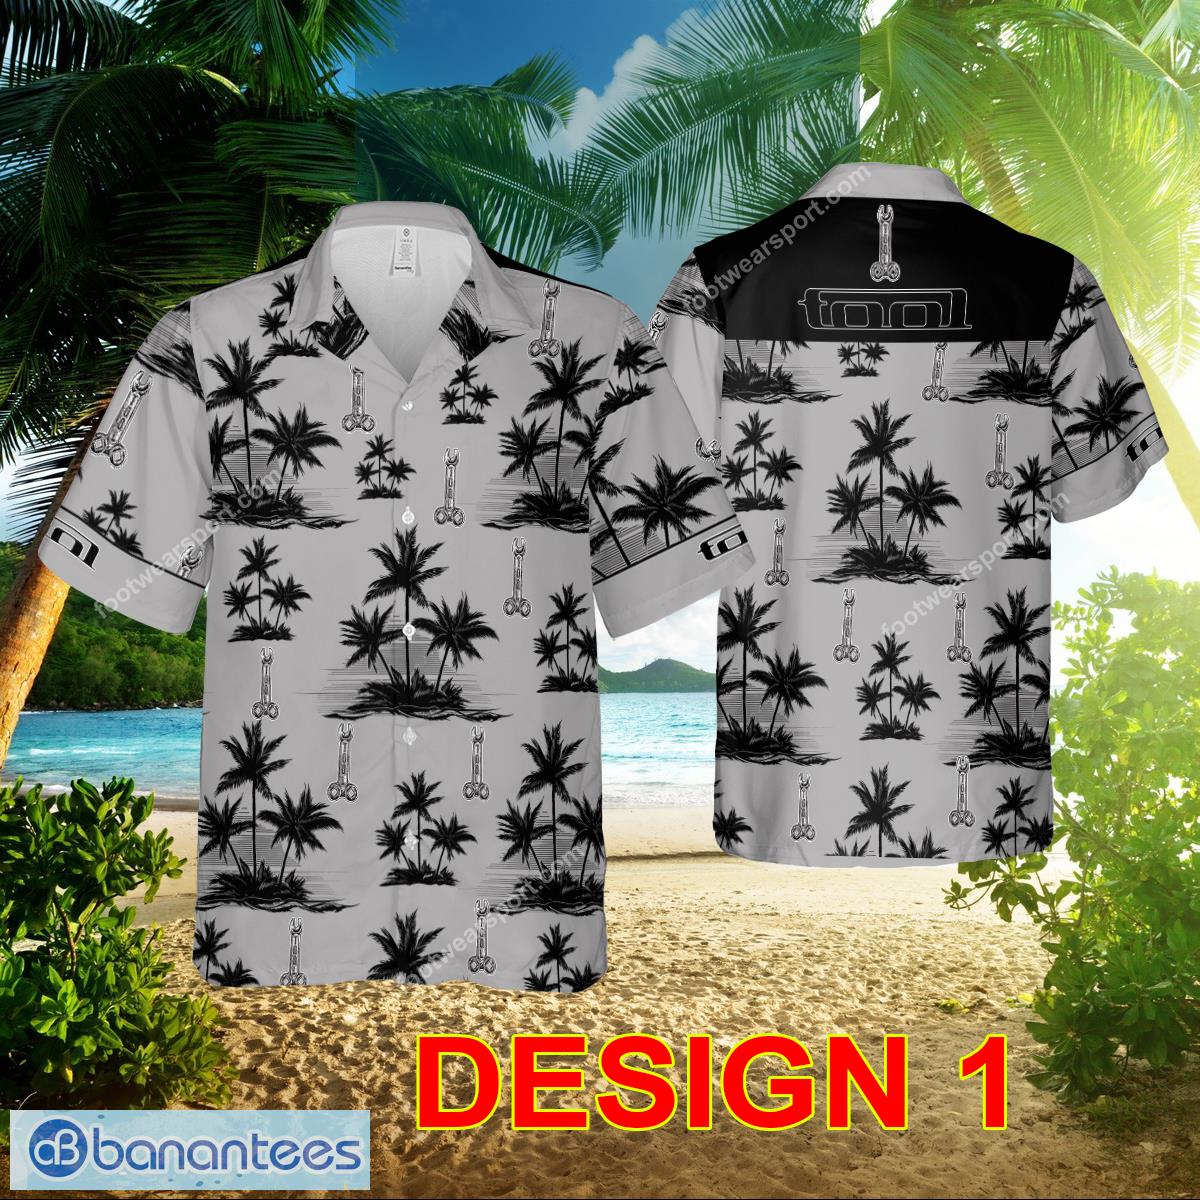 Tool Band Hawaiian Shirt Pattern All Over Print For Beach - Style 1 Tool Band Aloha Hawaiian Shirt Gift Summer